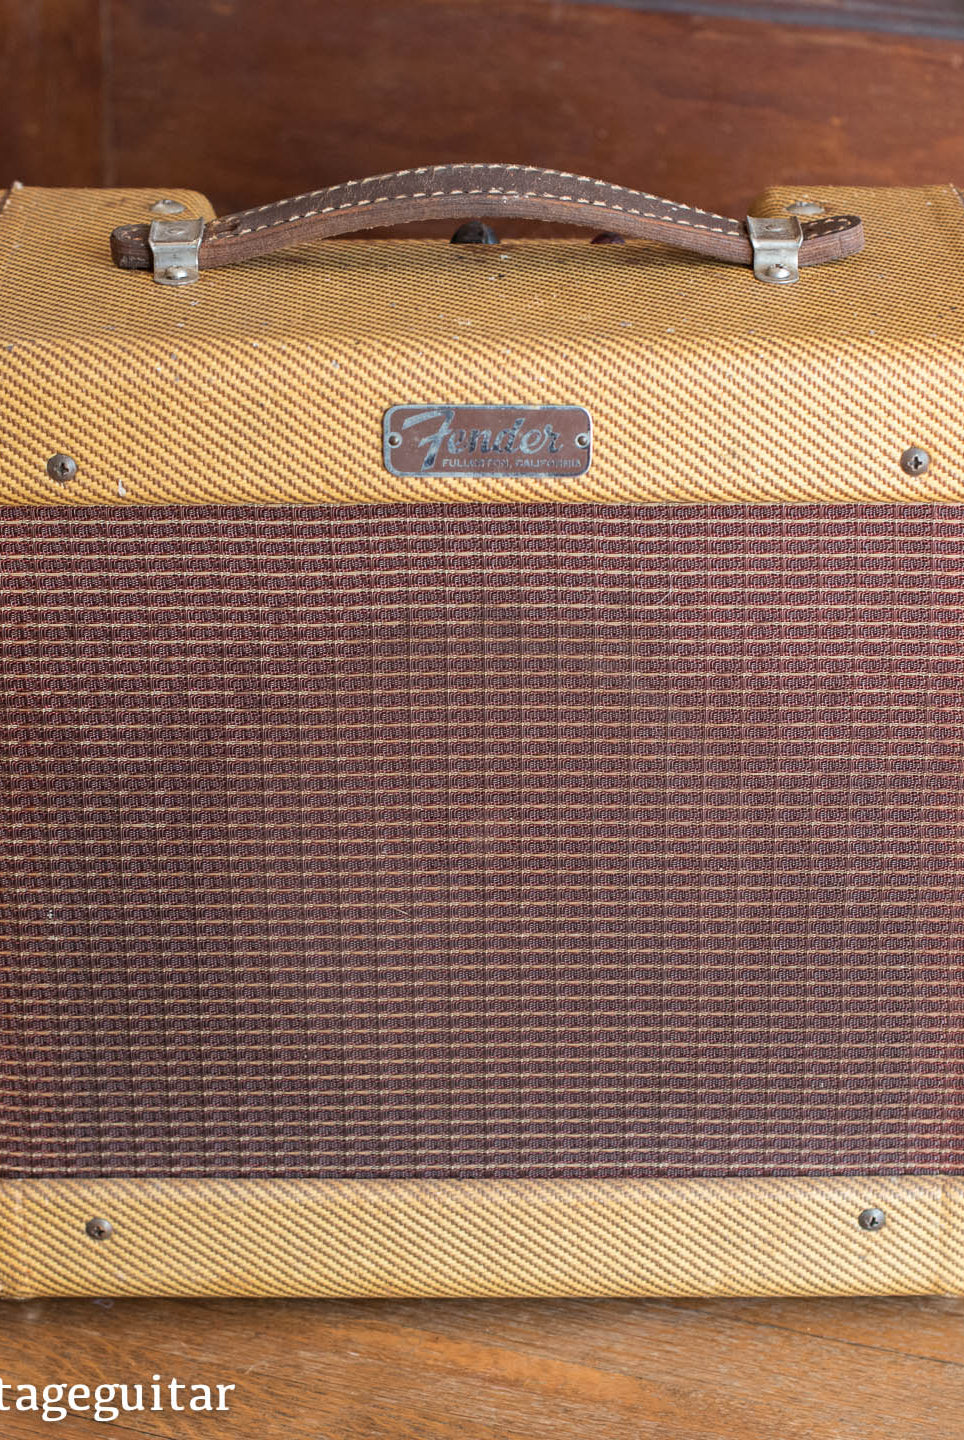 1957 Fender Champ Amp Tweed